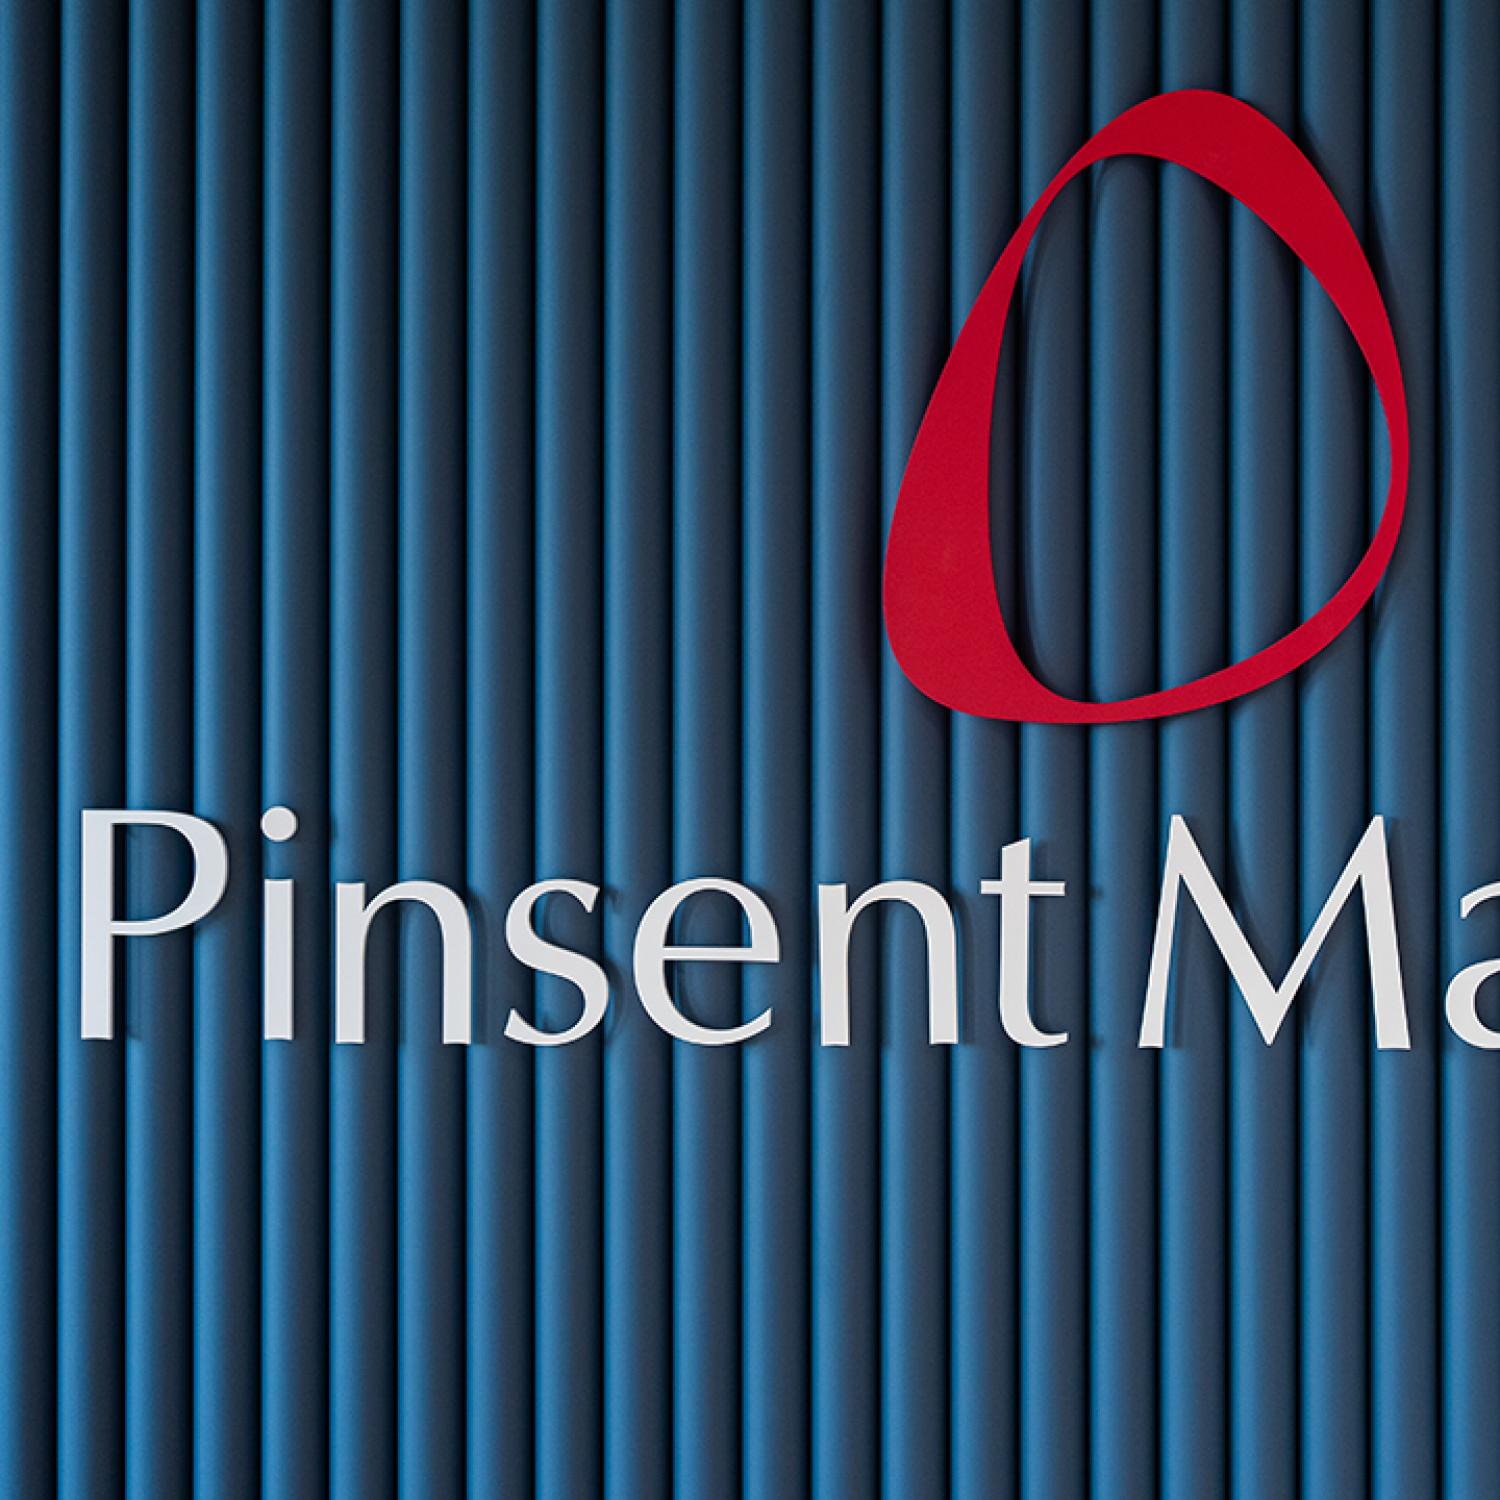 CSMM – architecture matters – Pinsent Masons LLP Frankfurt